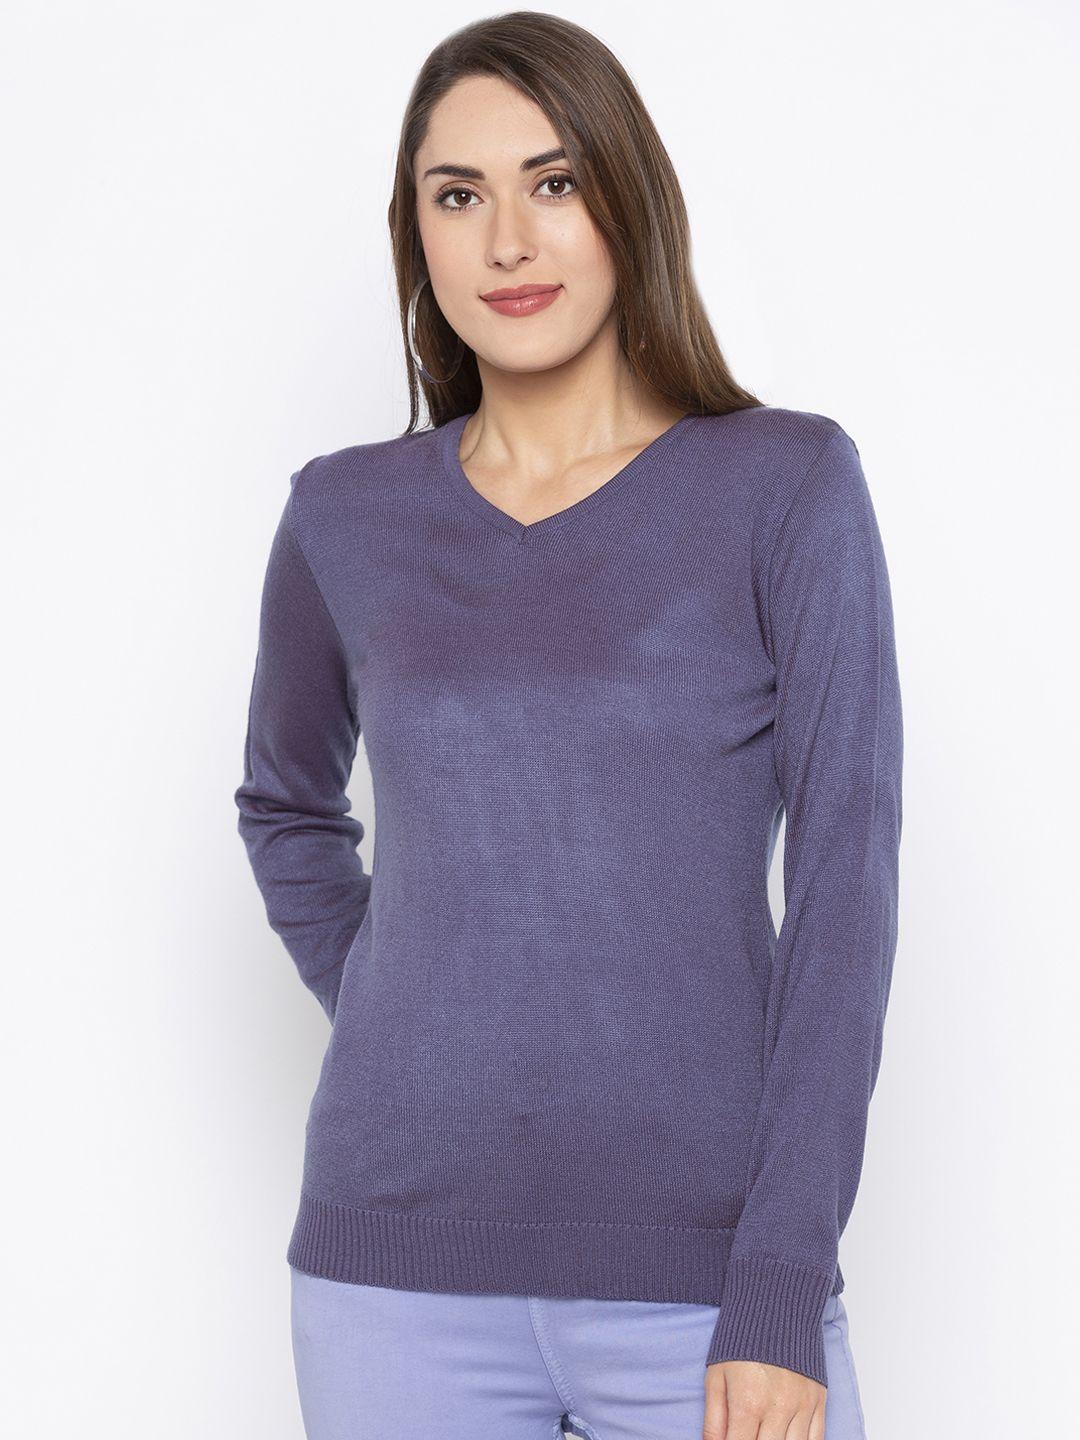 globus women purple solid sweater